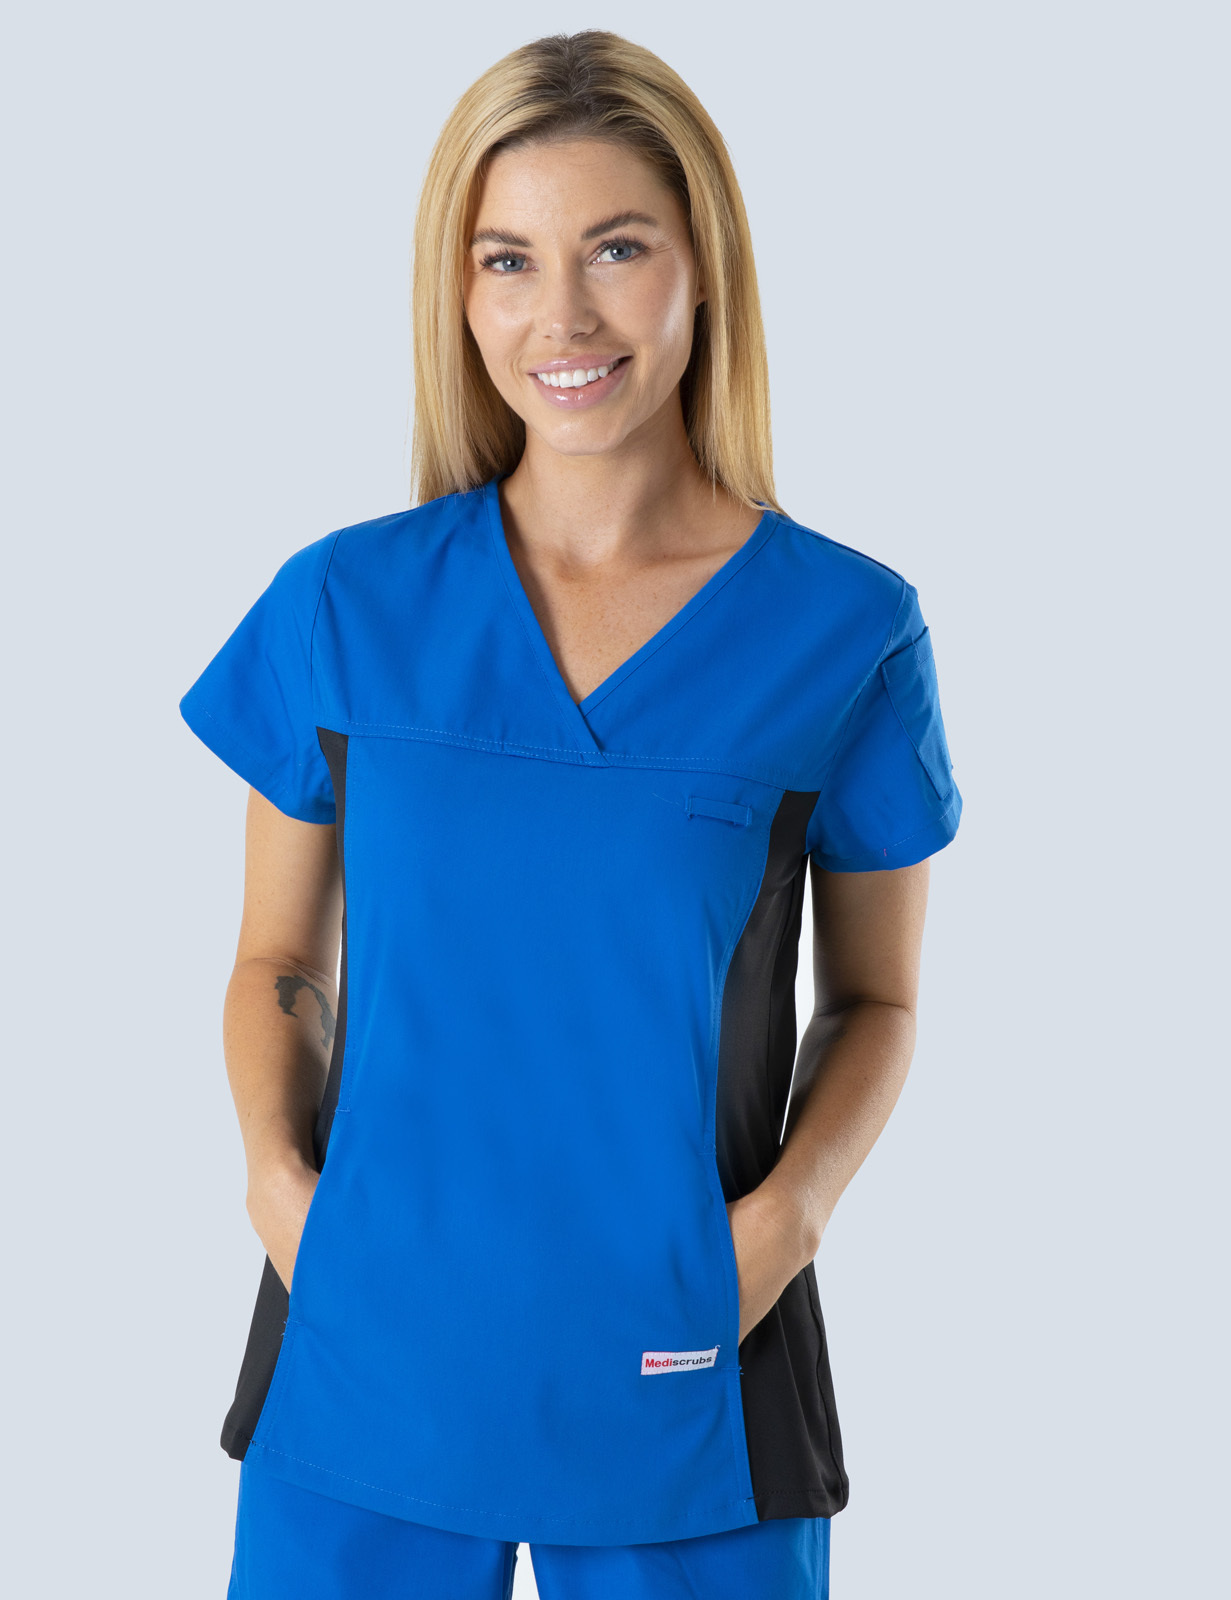 Ashmore Retreat Carer Uniform Top Only Bundle - (Women's Fit Spandex in Royal incl Logo) 